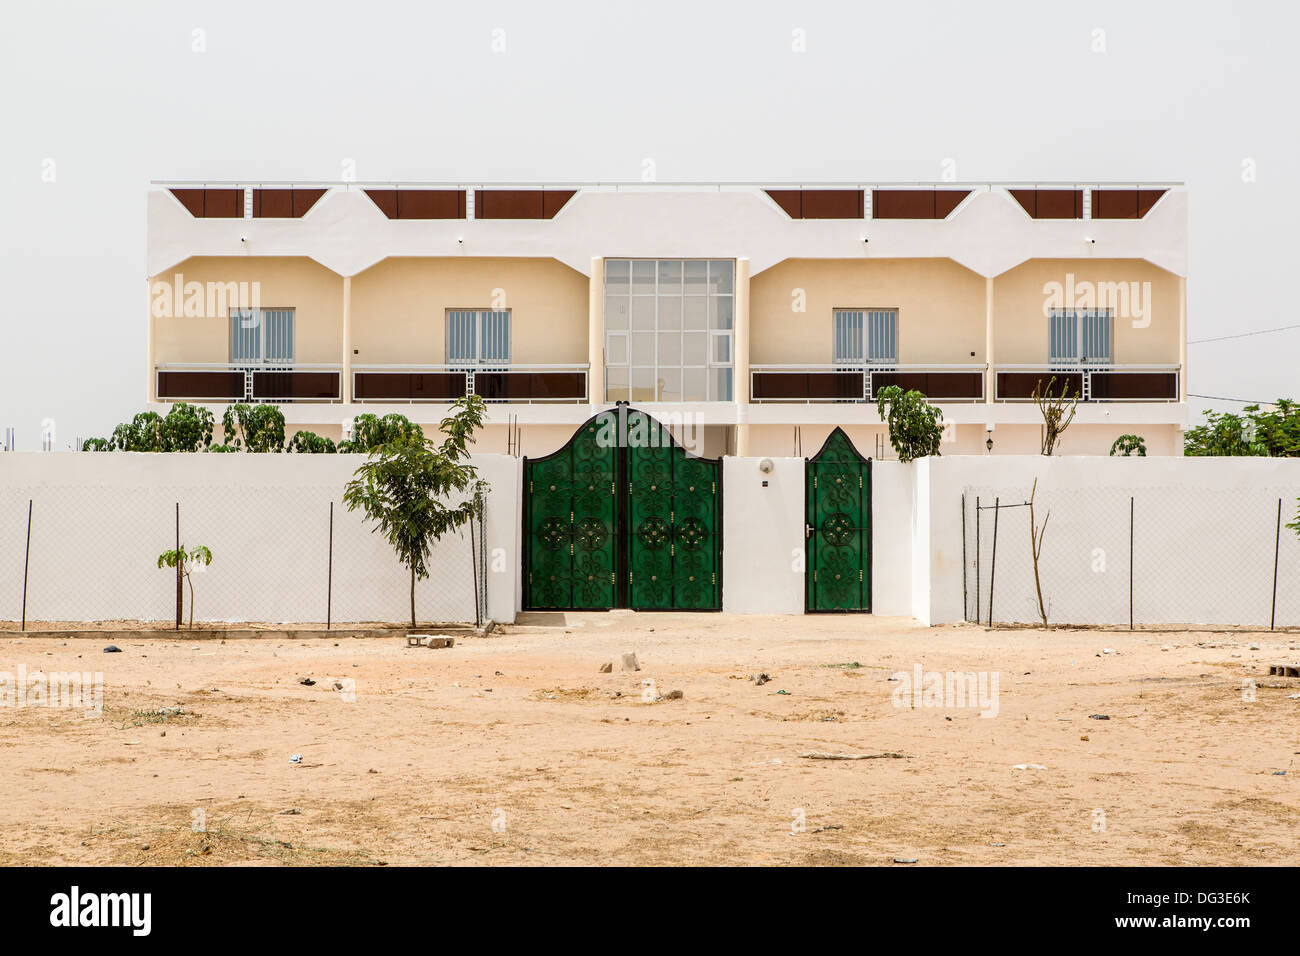 Minimalist House Design: Modern African House Design